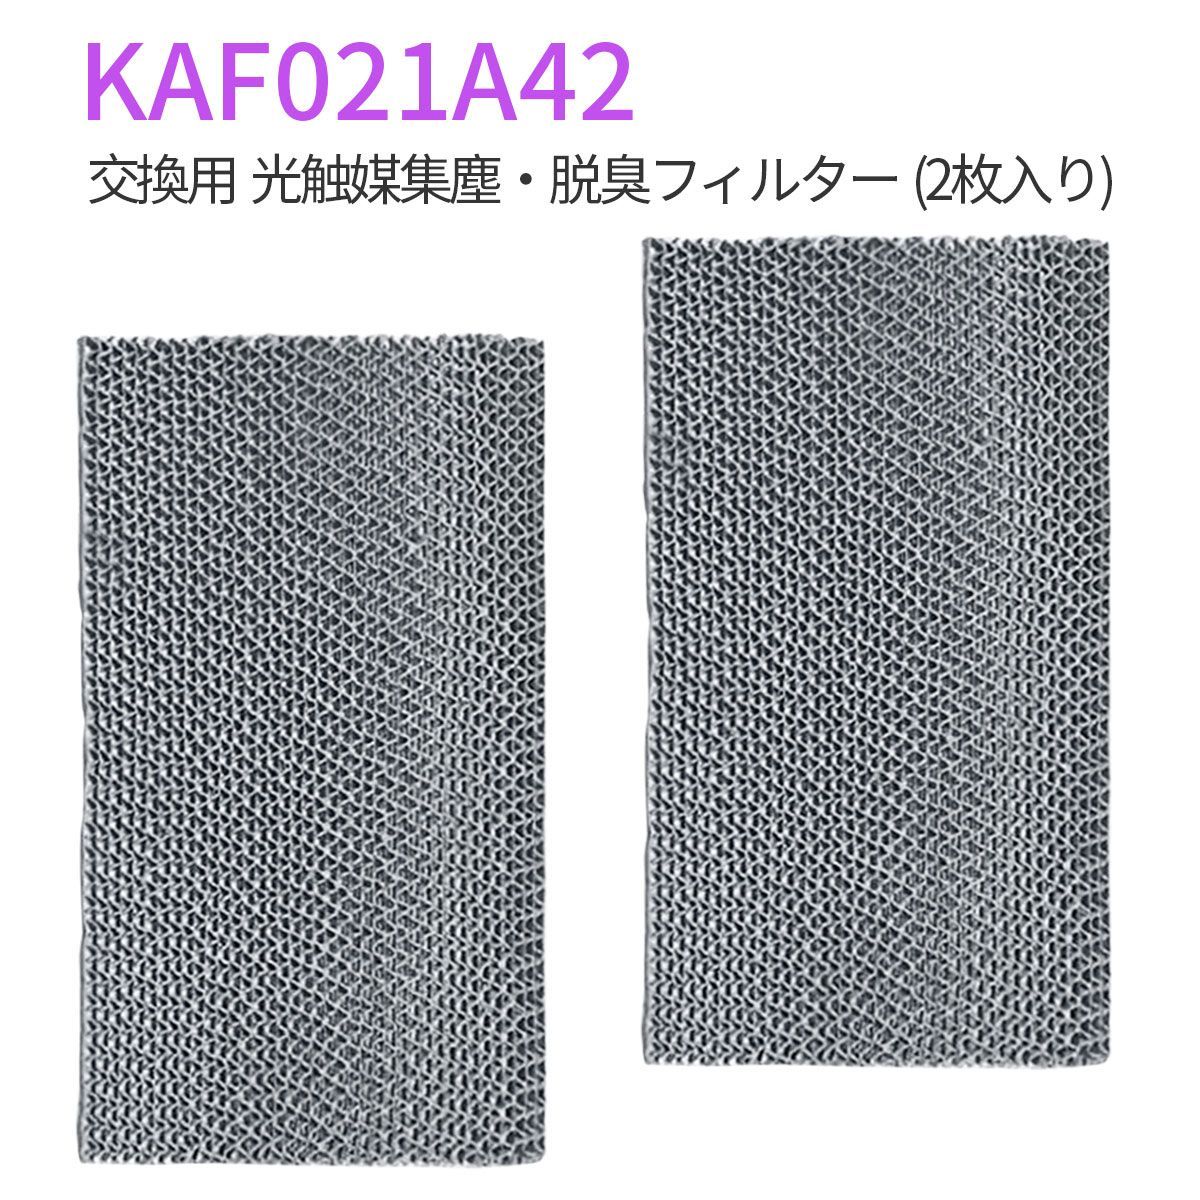 kaf021a42 ダイキン エアコン フィルター KAF021A42 光触媒集塵 脱臭フィルター 99a0484 エアコン用交換フィルター 枠なし  (互換品/2枚セット) - メルカリ